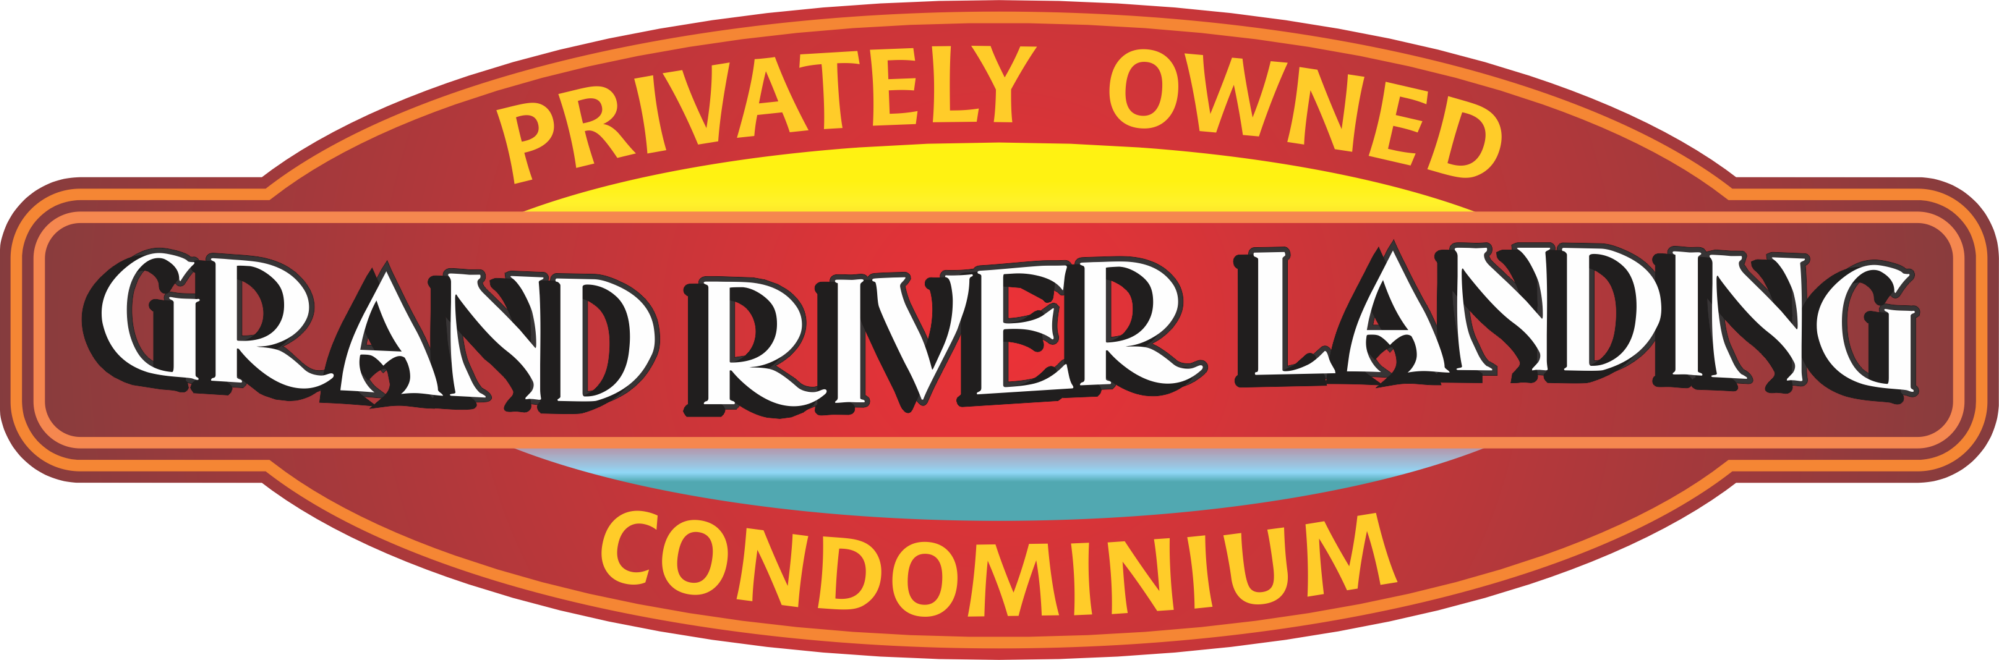 Grand River Landing RV Condo Park